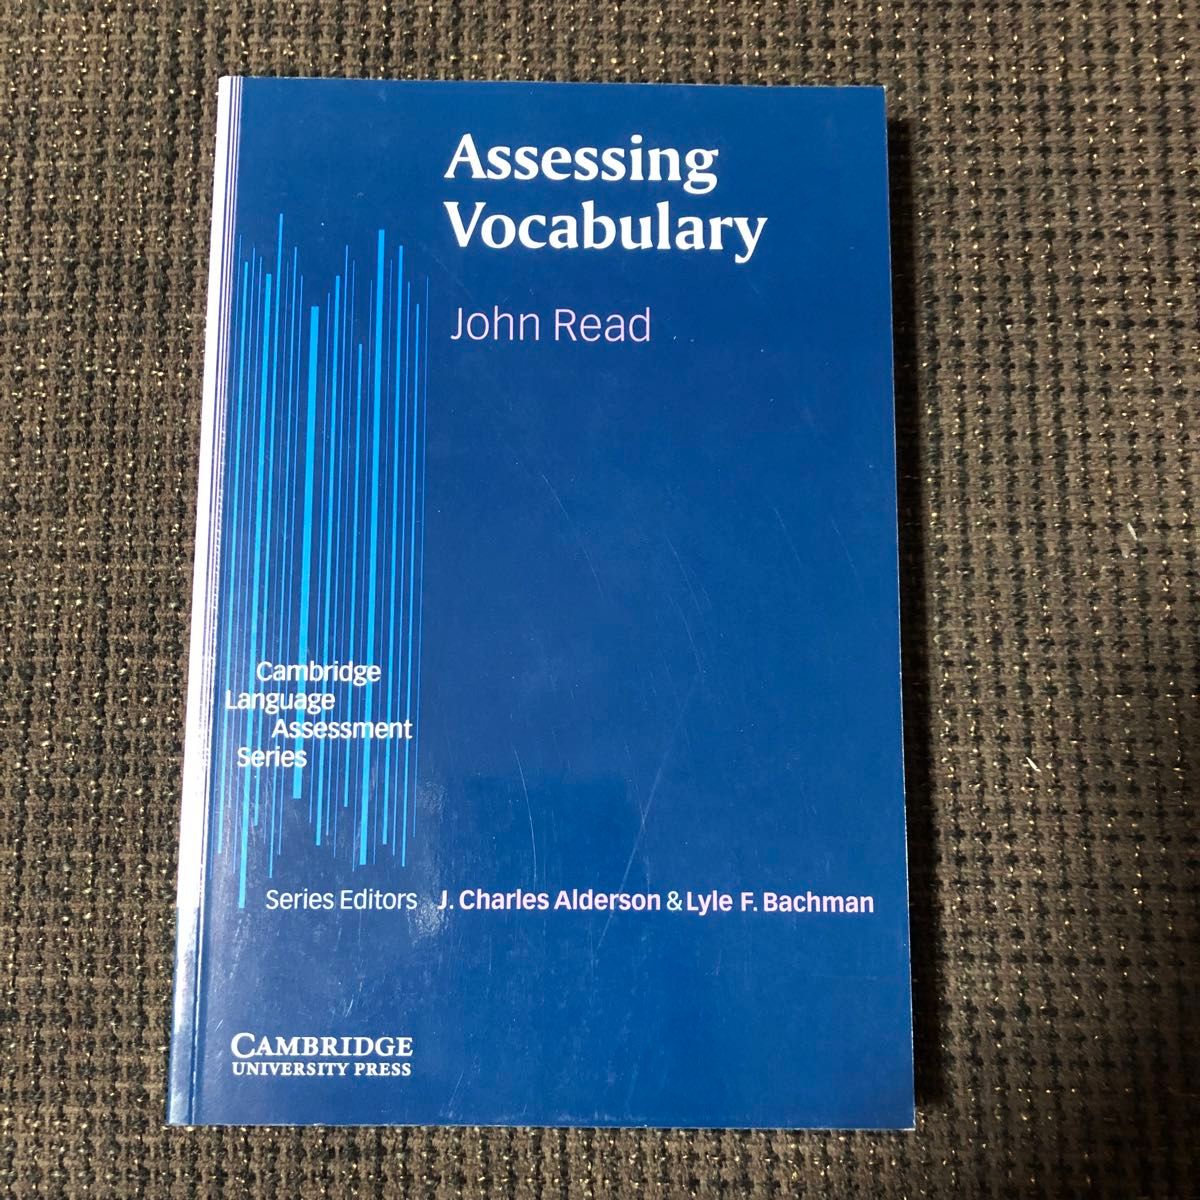 John Read(2000)『Assessing Vocabulary』洋書　ペーパーバック